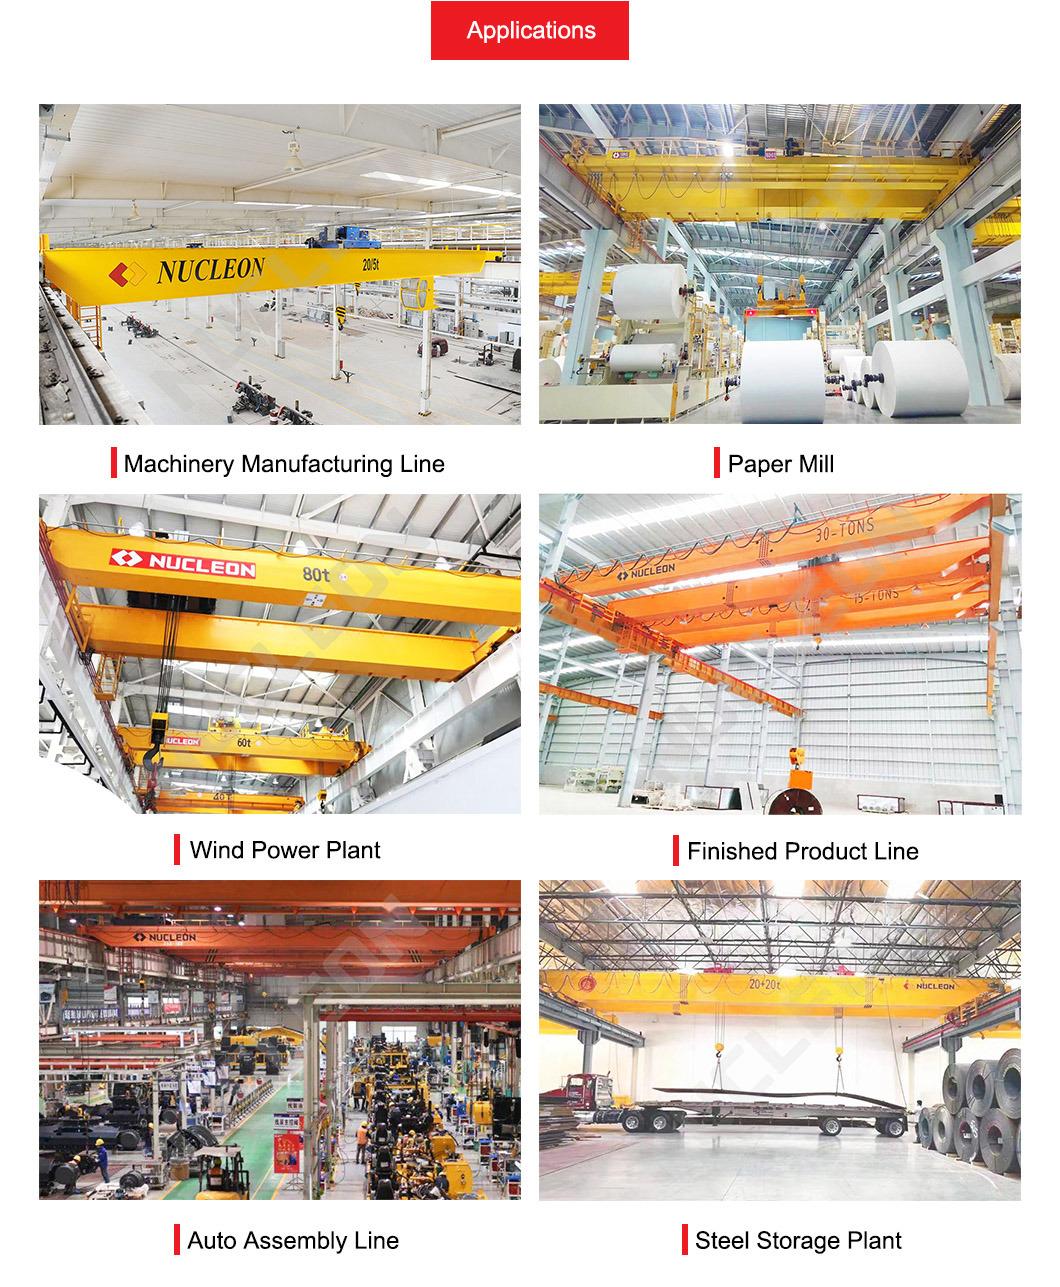 China Premium Manufacturer Nucleon High Reliability Double Girder Overhead Crane 20t